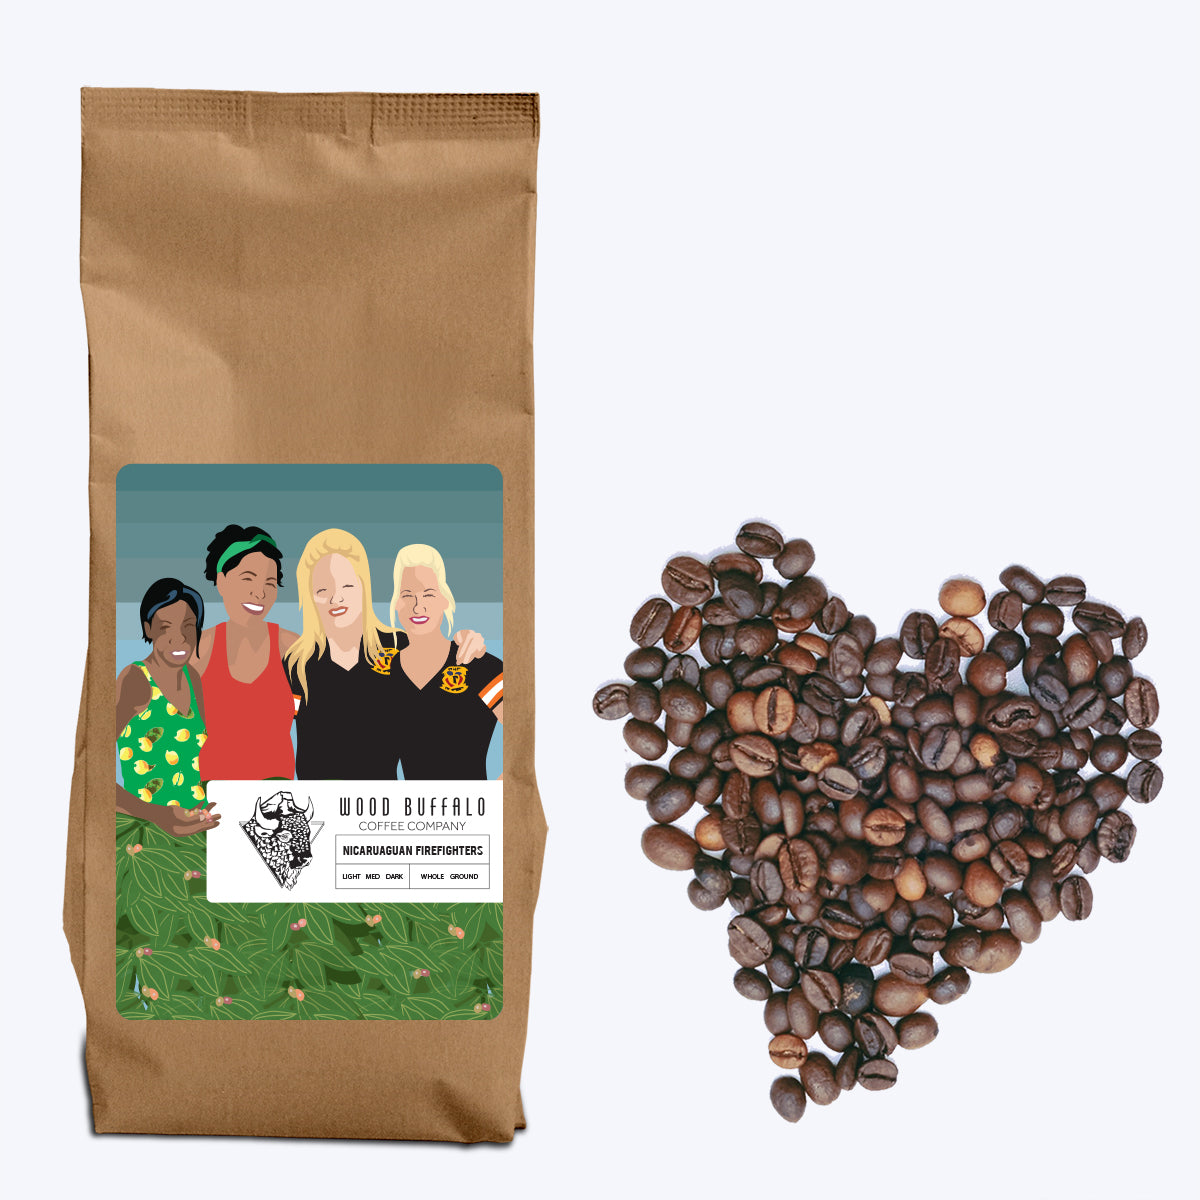 Las Diasos women and FMFD Firefit women 340 g bag coffee